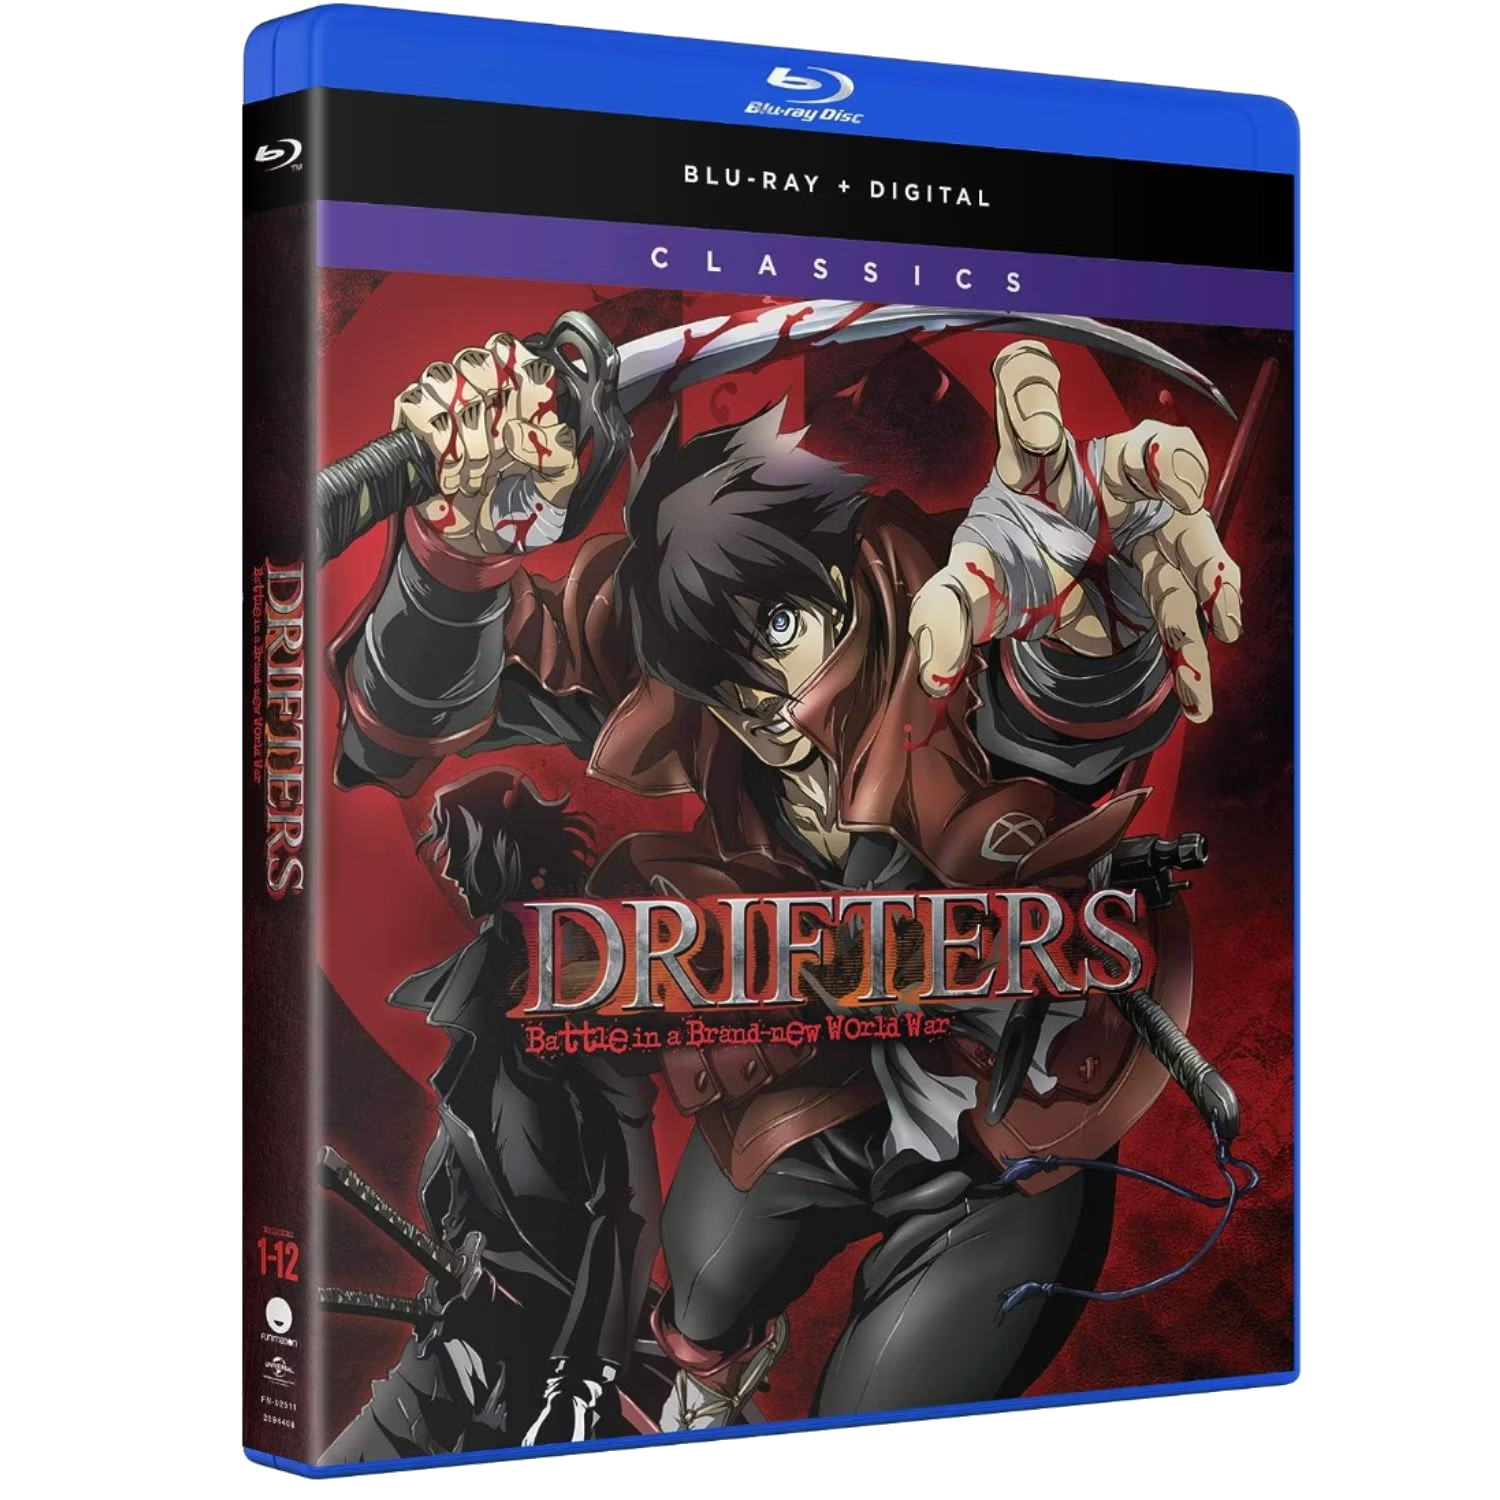 Drifters on Blu-ray